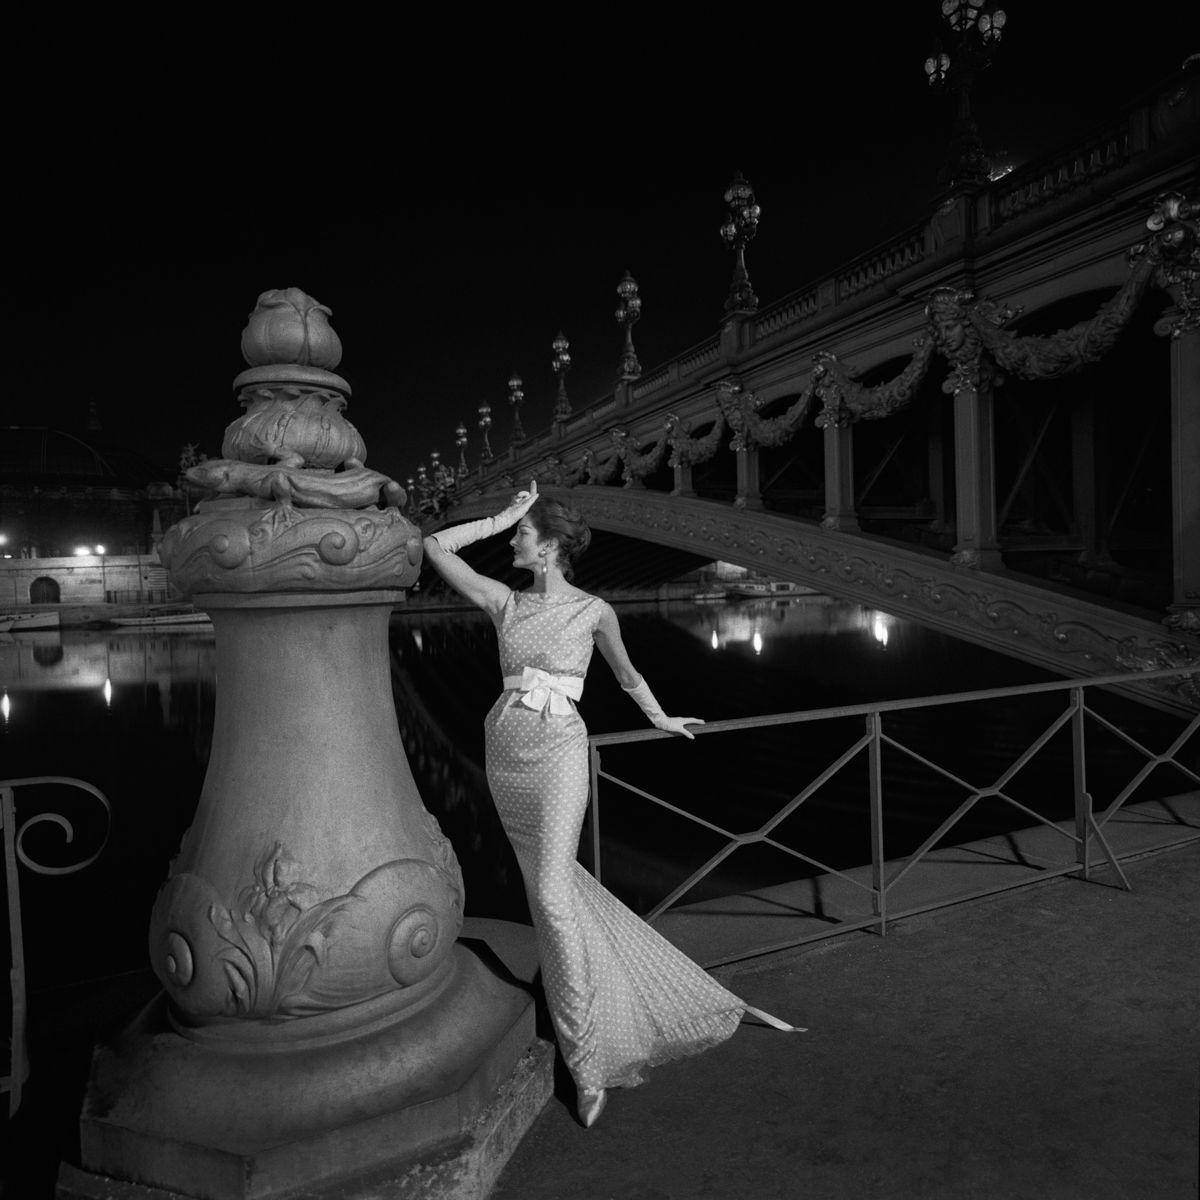 Balmain's Mermaid, A Night in Paris